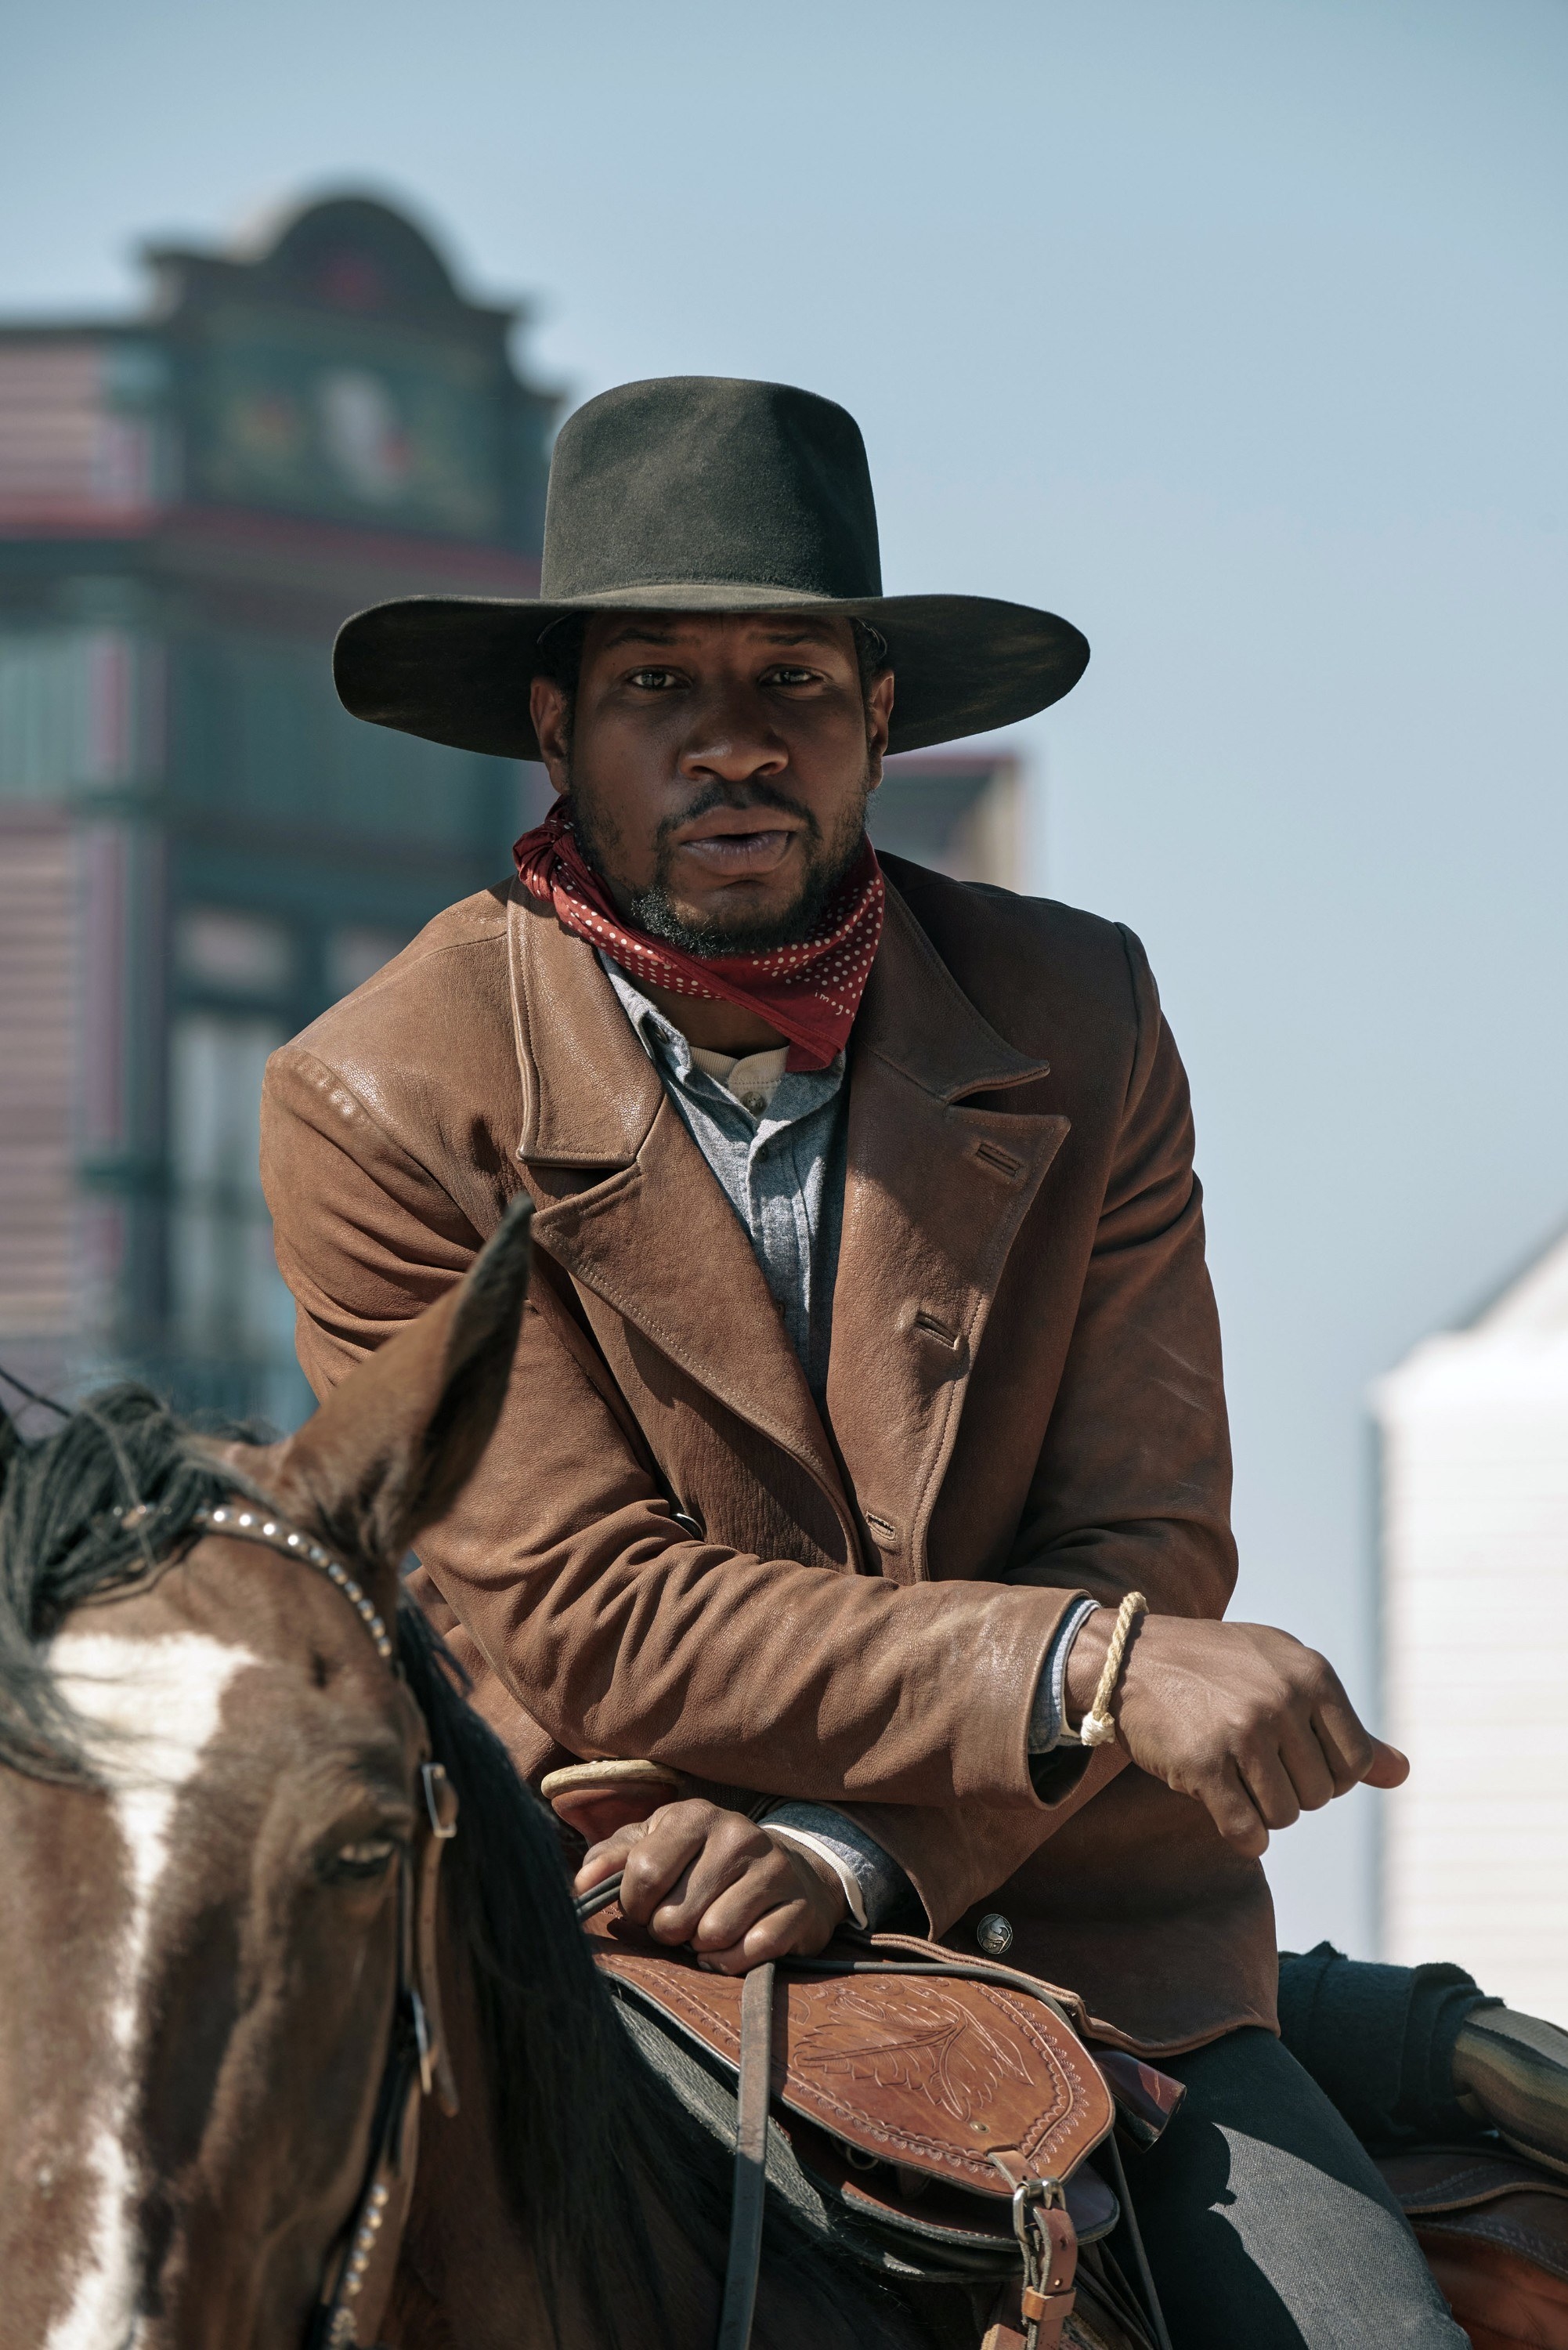 wearing a cowboy hat and jacket while horseback